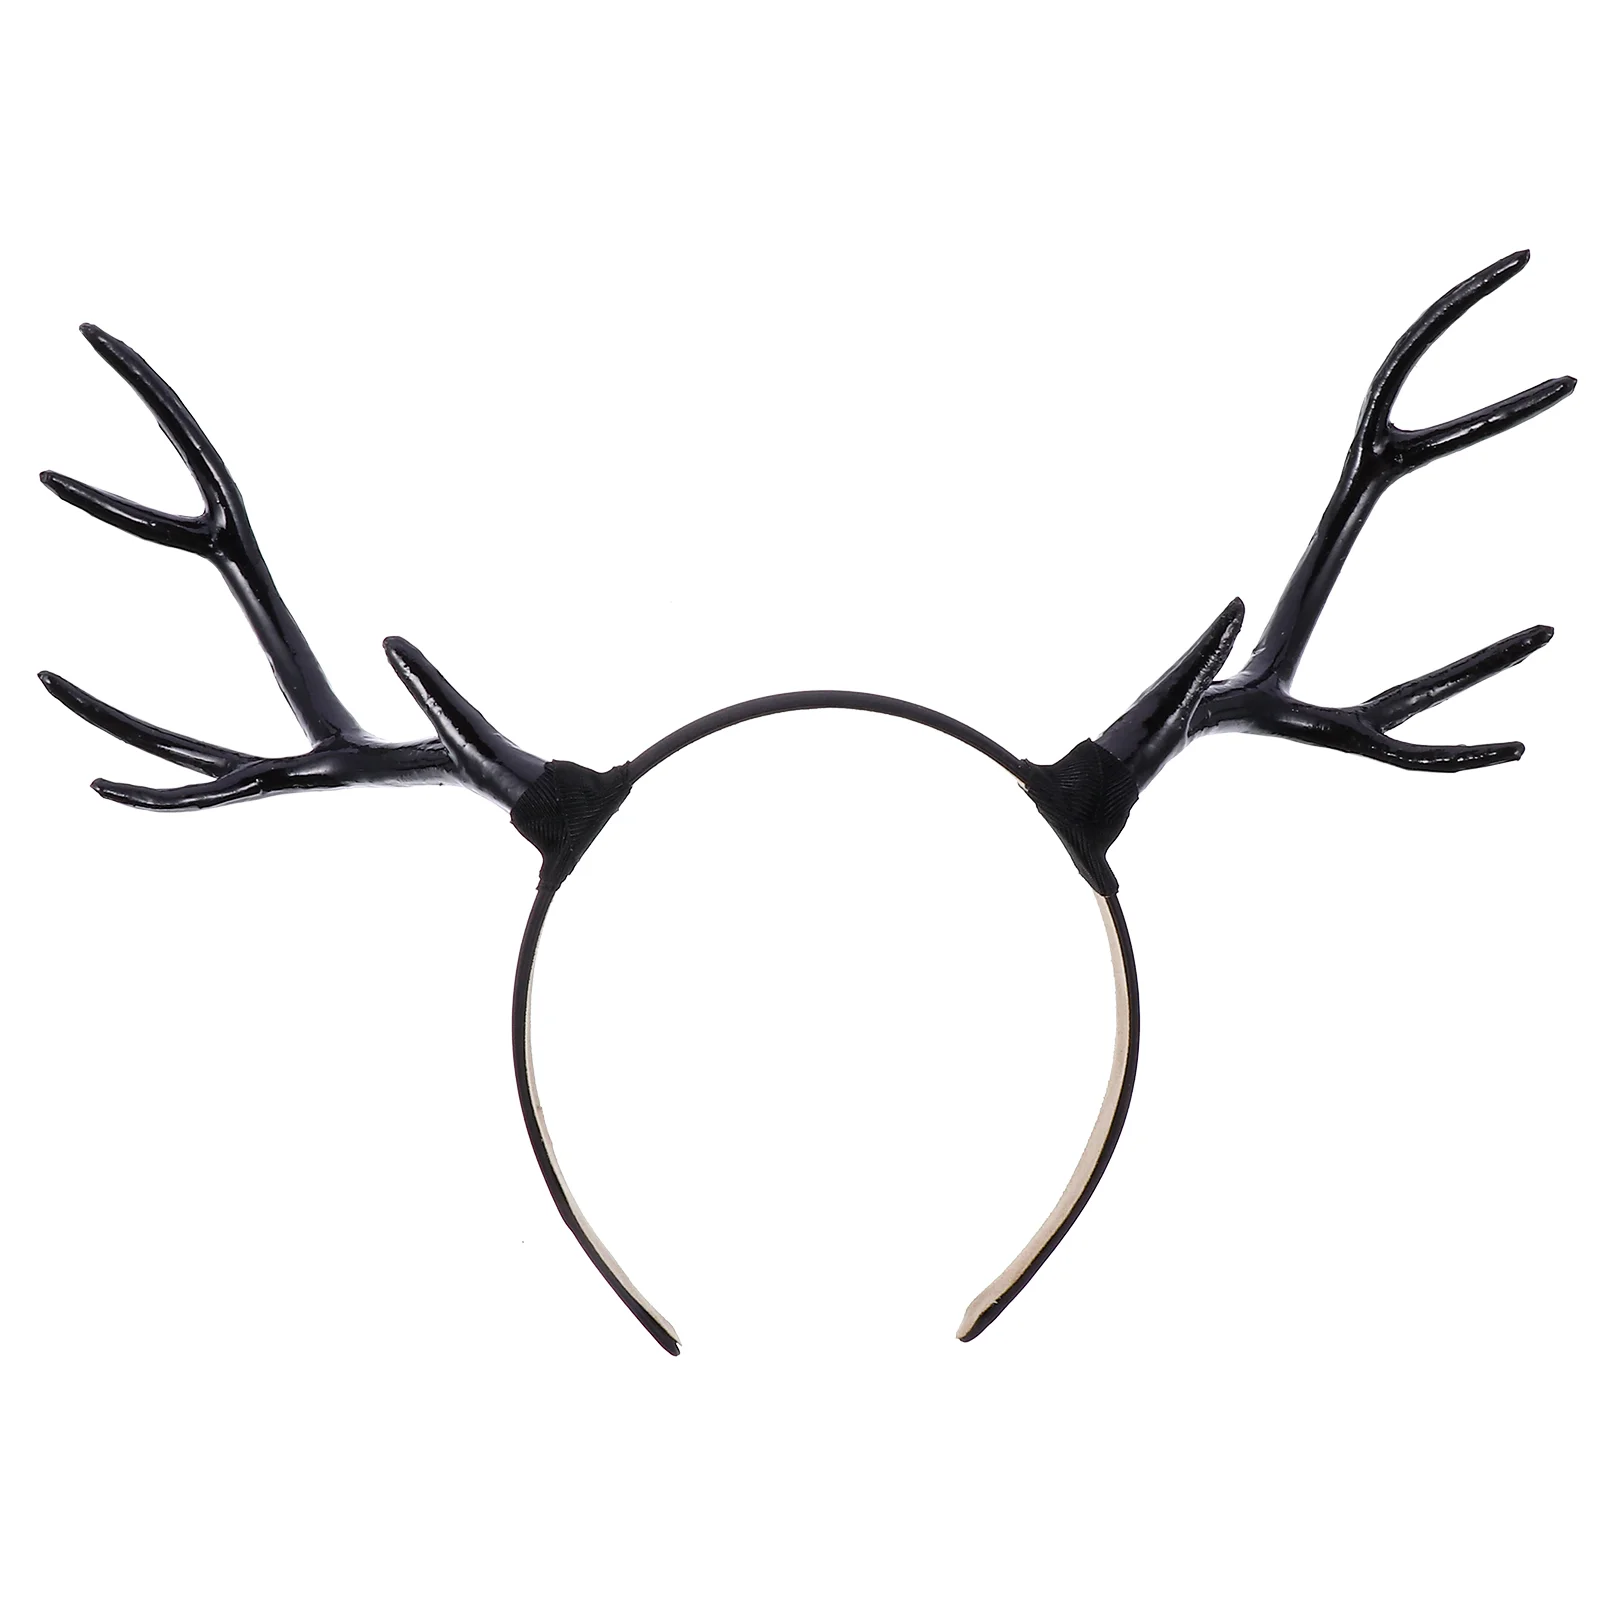 

Tree branch Antlers Headband Black Elk Horn Hair Gothic Head Band Headpiece Headdress for Christmas Photo Props